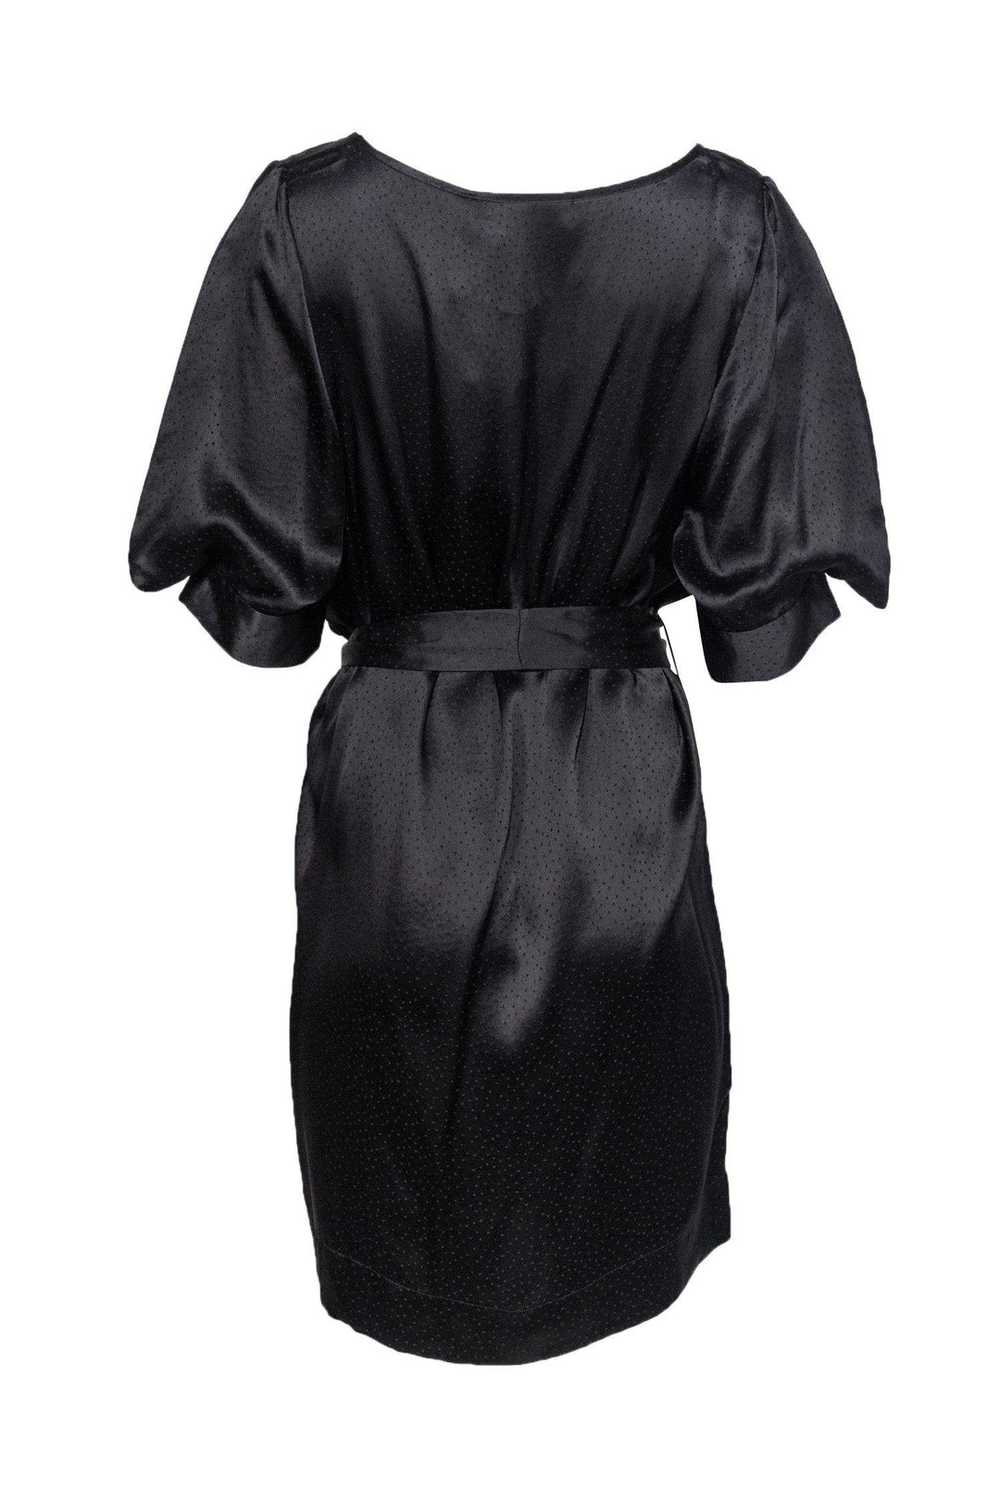 Stella McCartney - Black Silk Dress w/ Polka Dots… - image 3